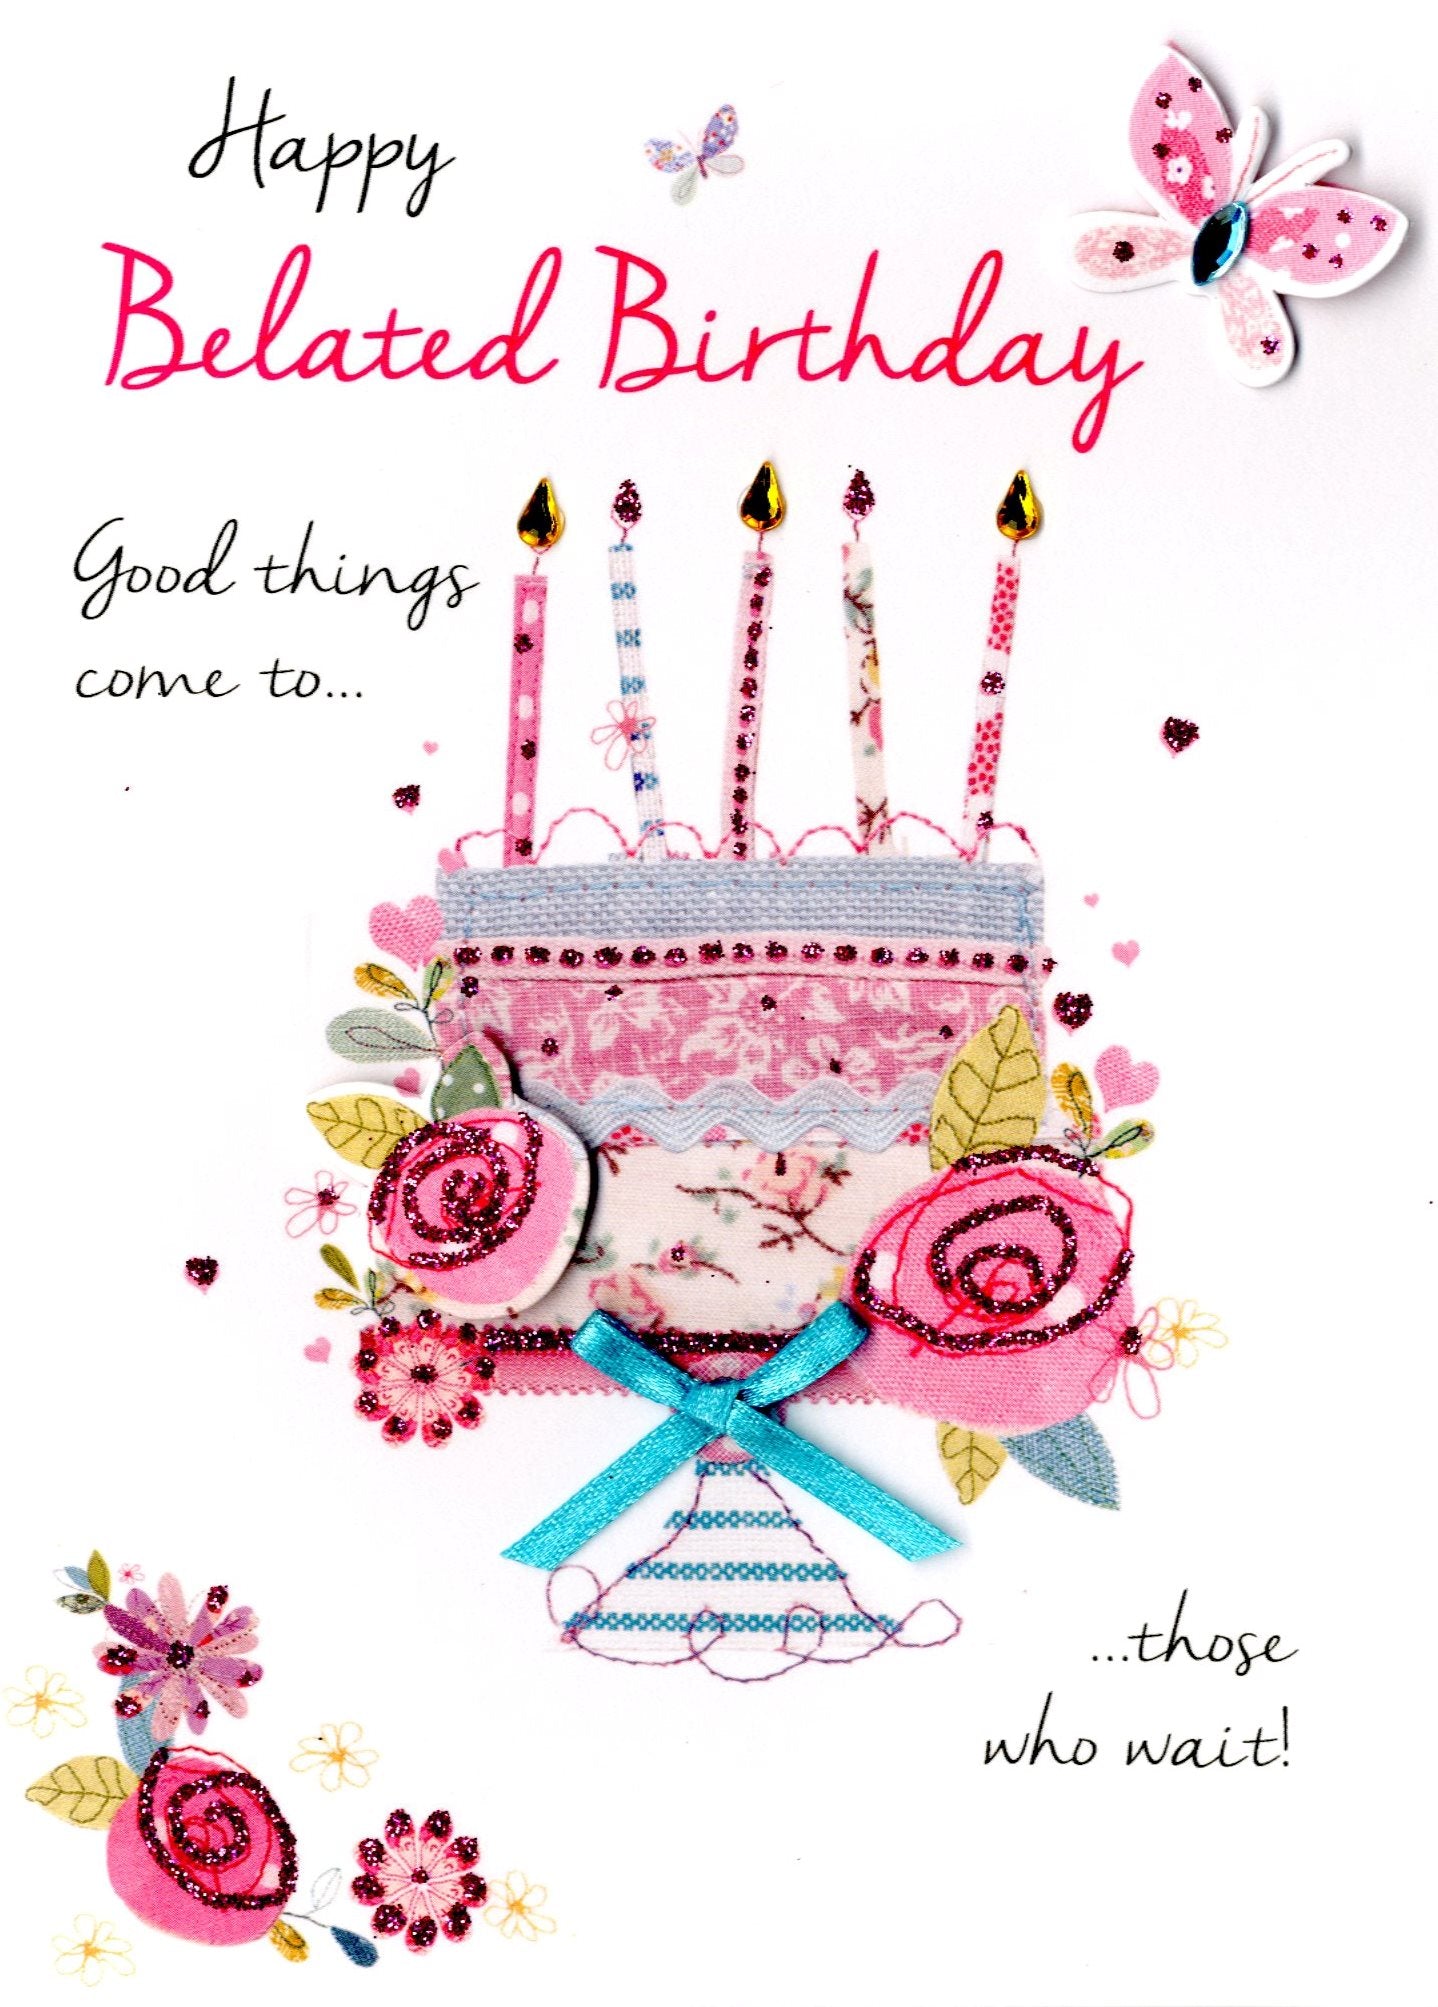 Happy Belated Birthday Greeting Card!